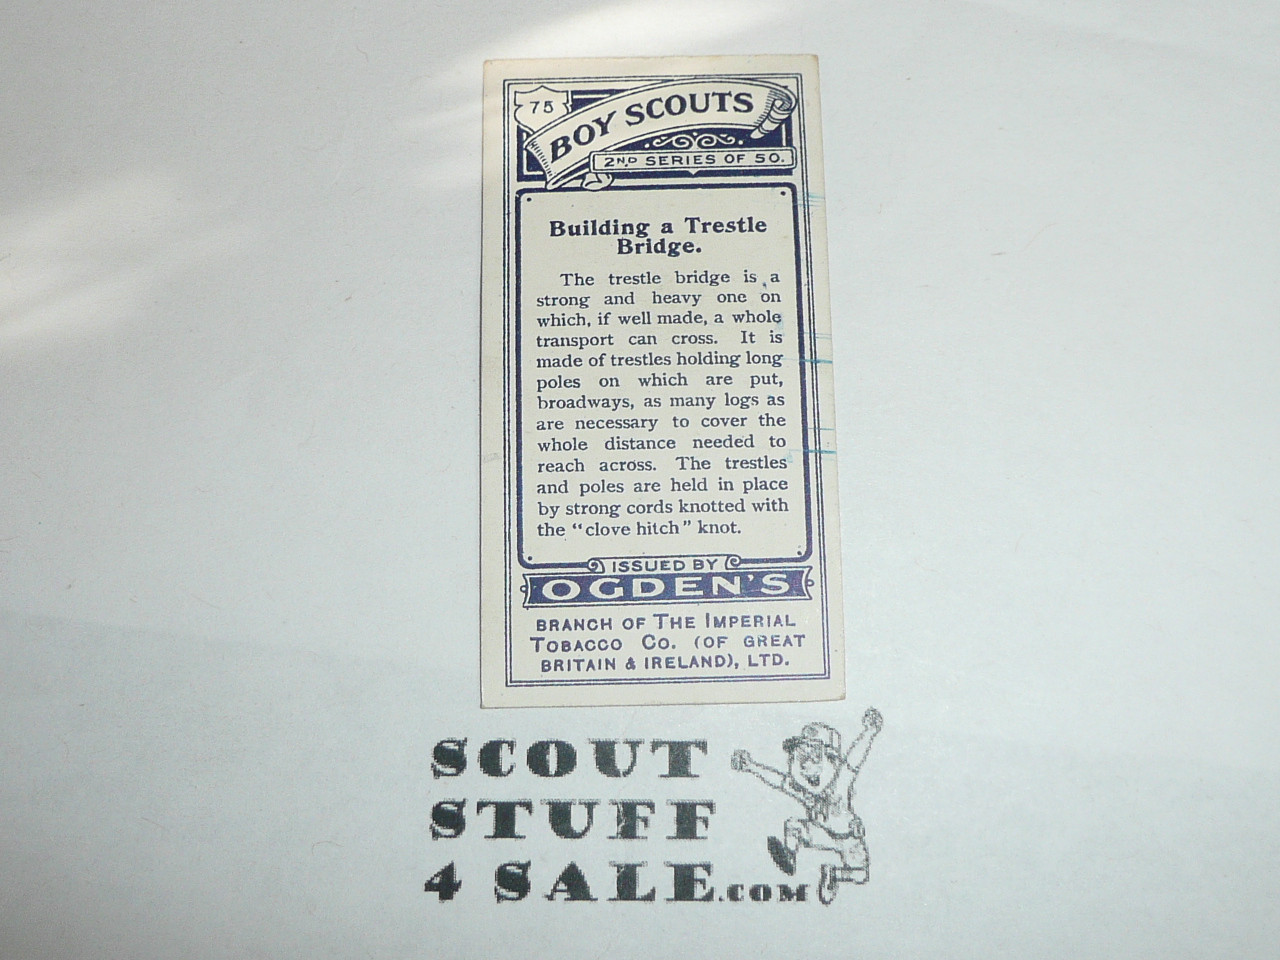 Ogden Tabacco Company Premium Card, Second Boy Scout Series of 50 (Blue Backs), Card #75 Building a Trestle Bridge, 1912